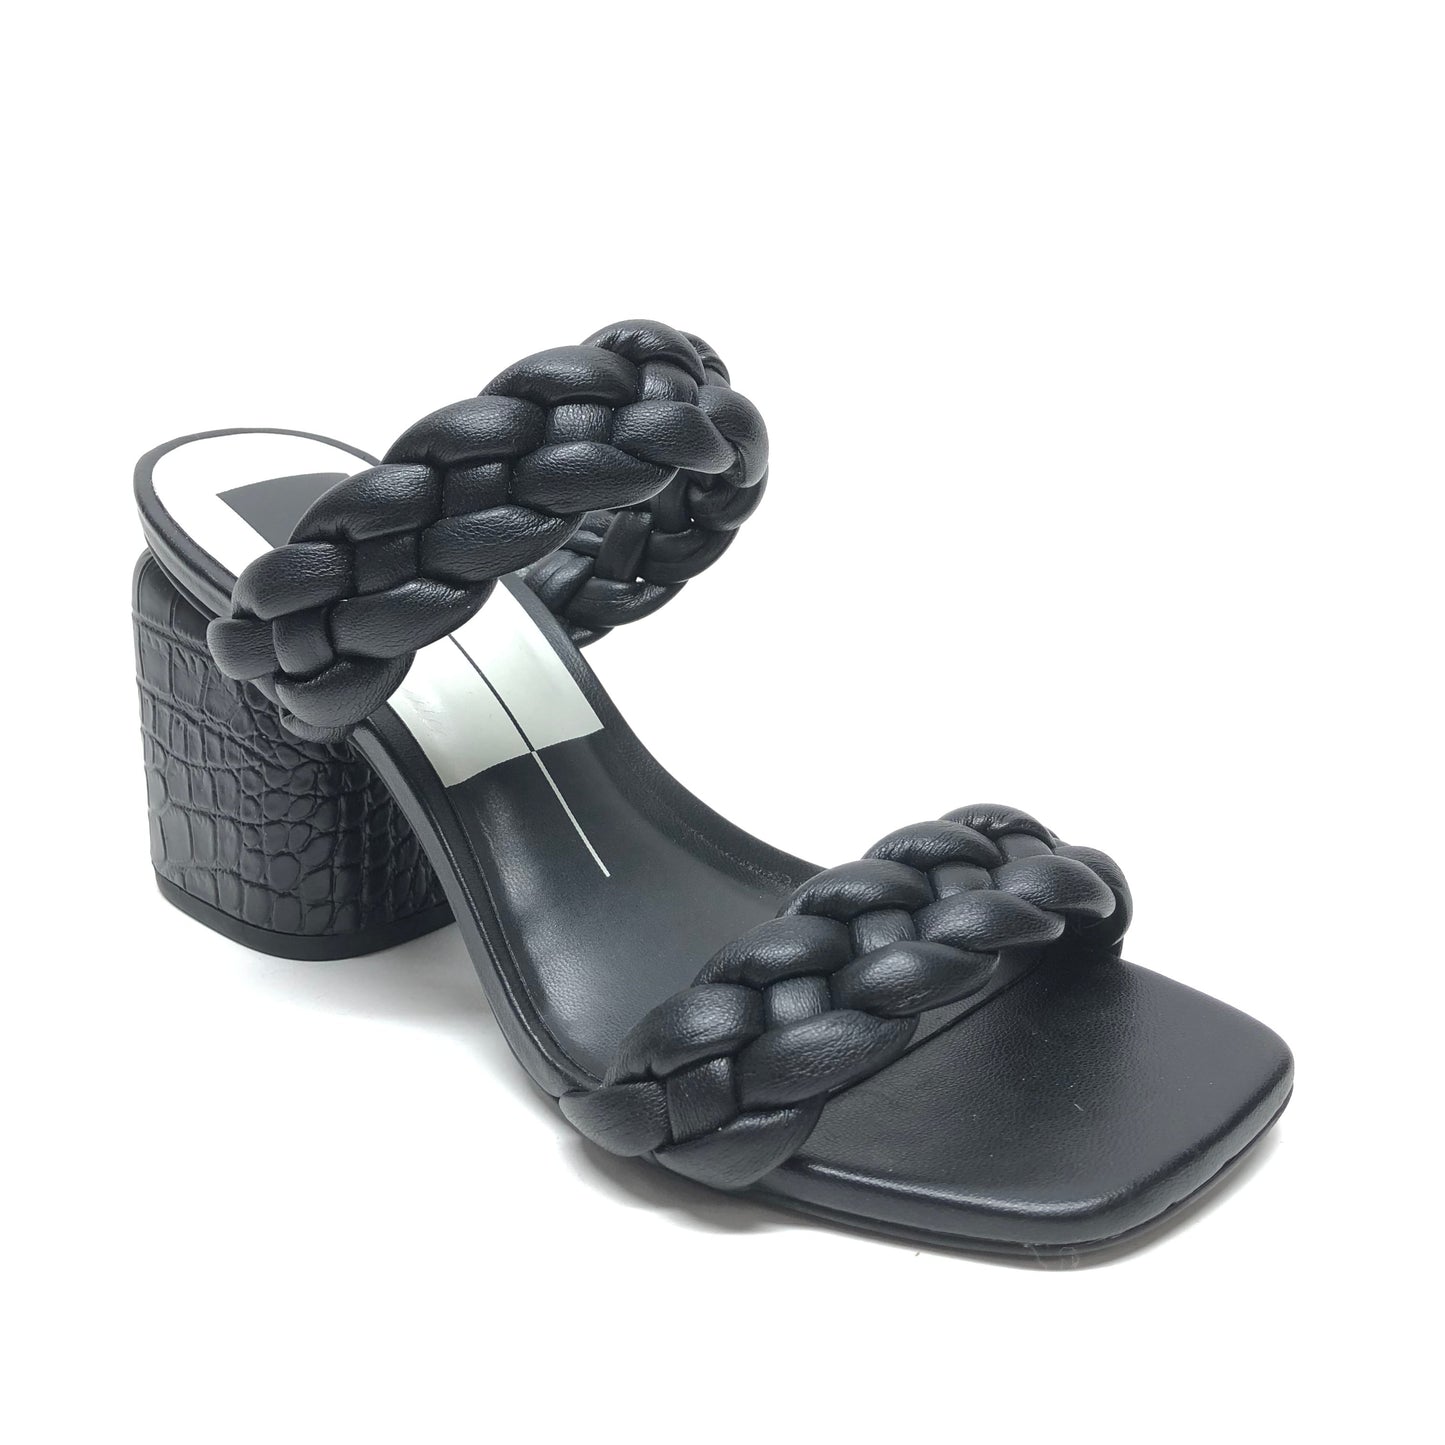 Black Sandals Heels Block Dolce Vita, Size 6